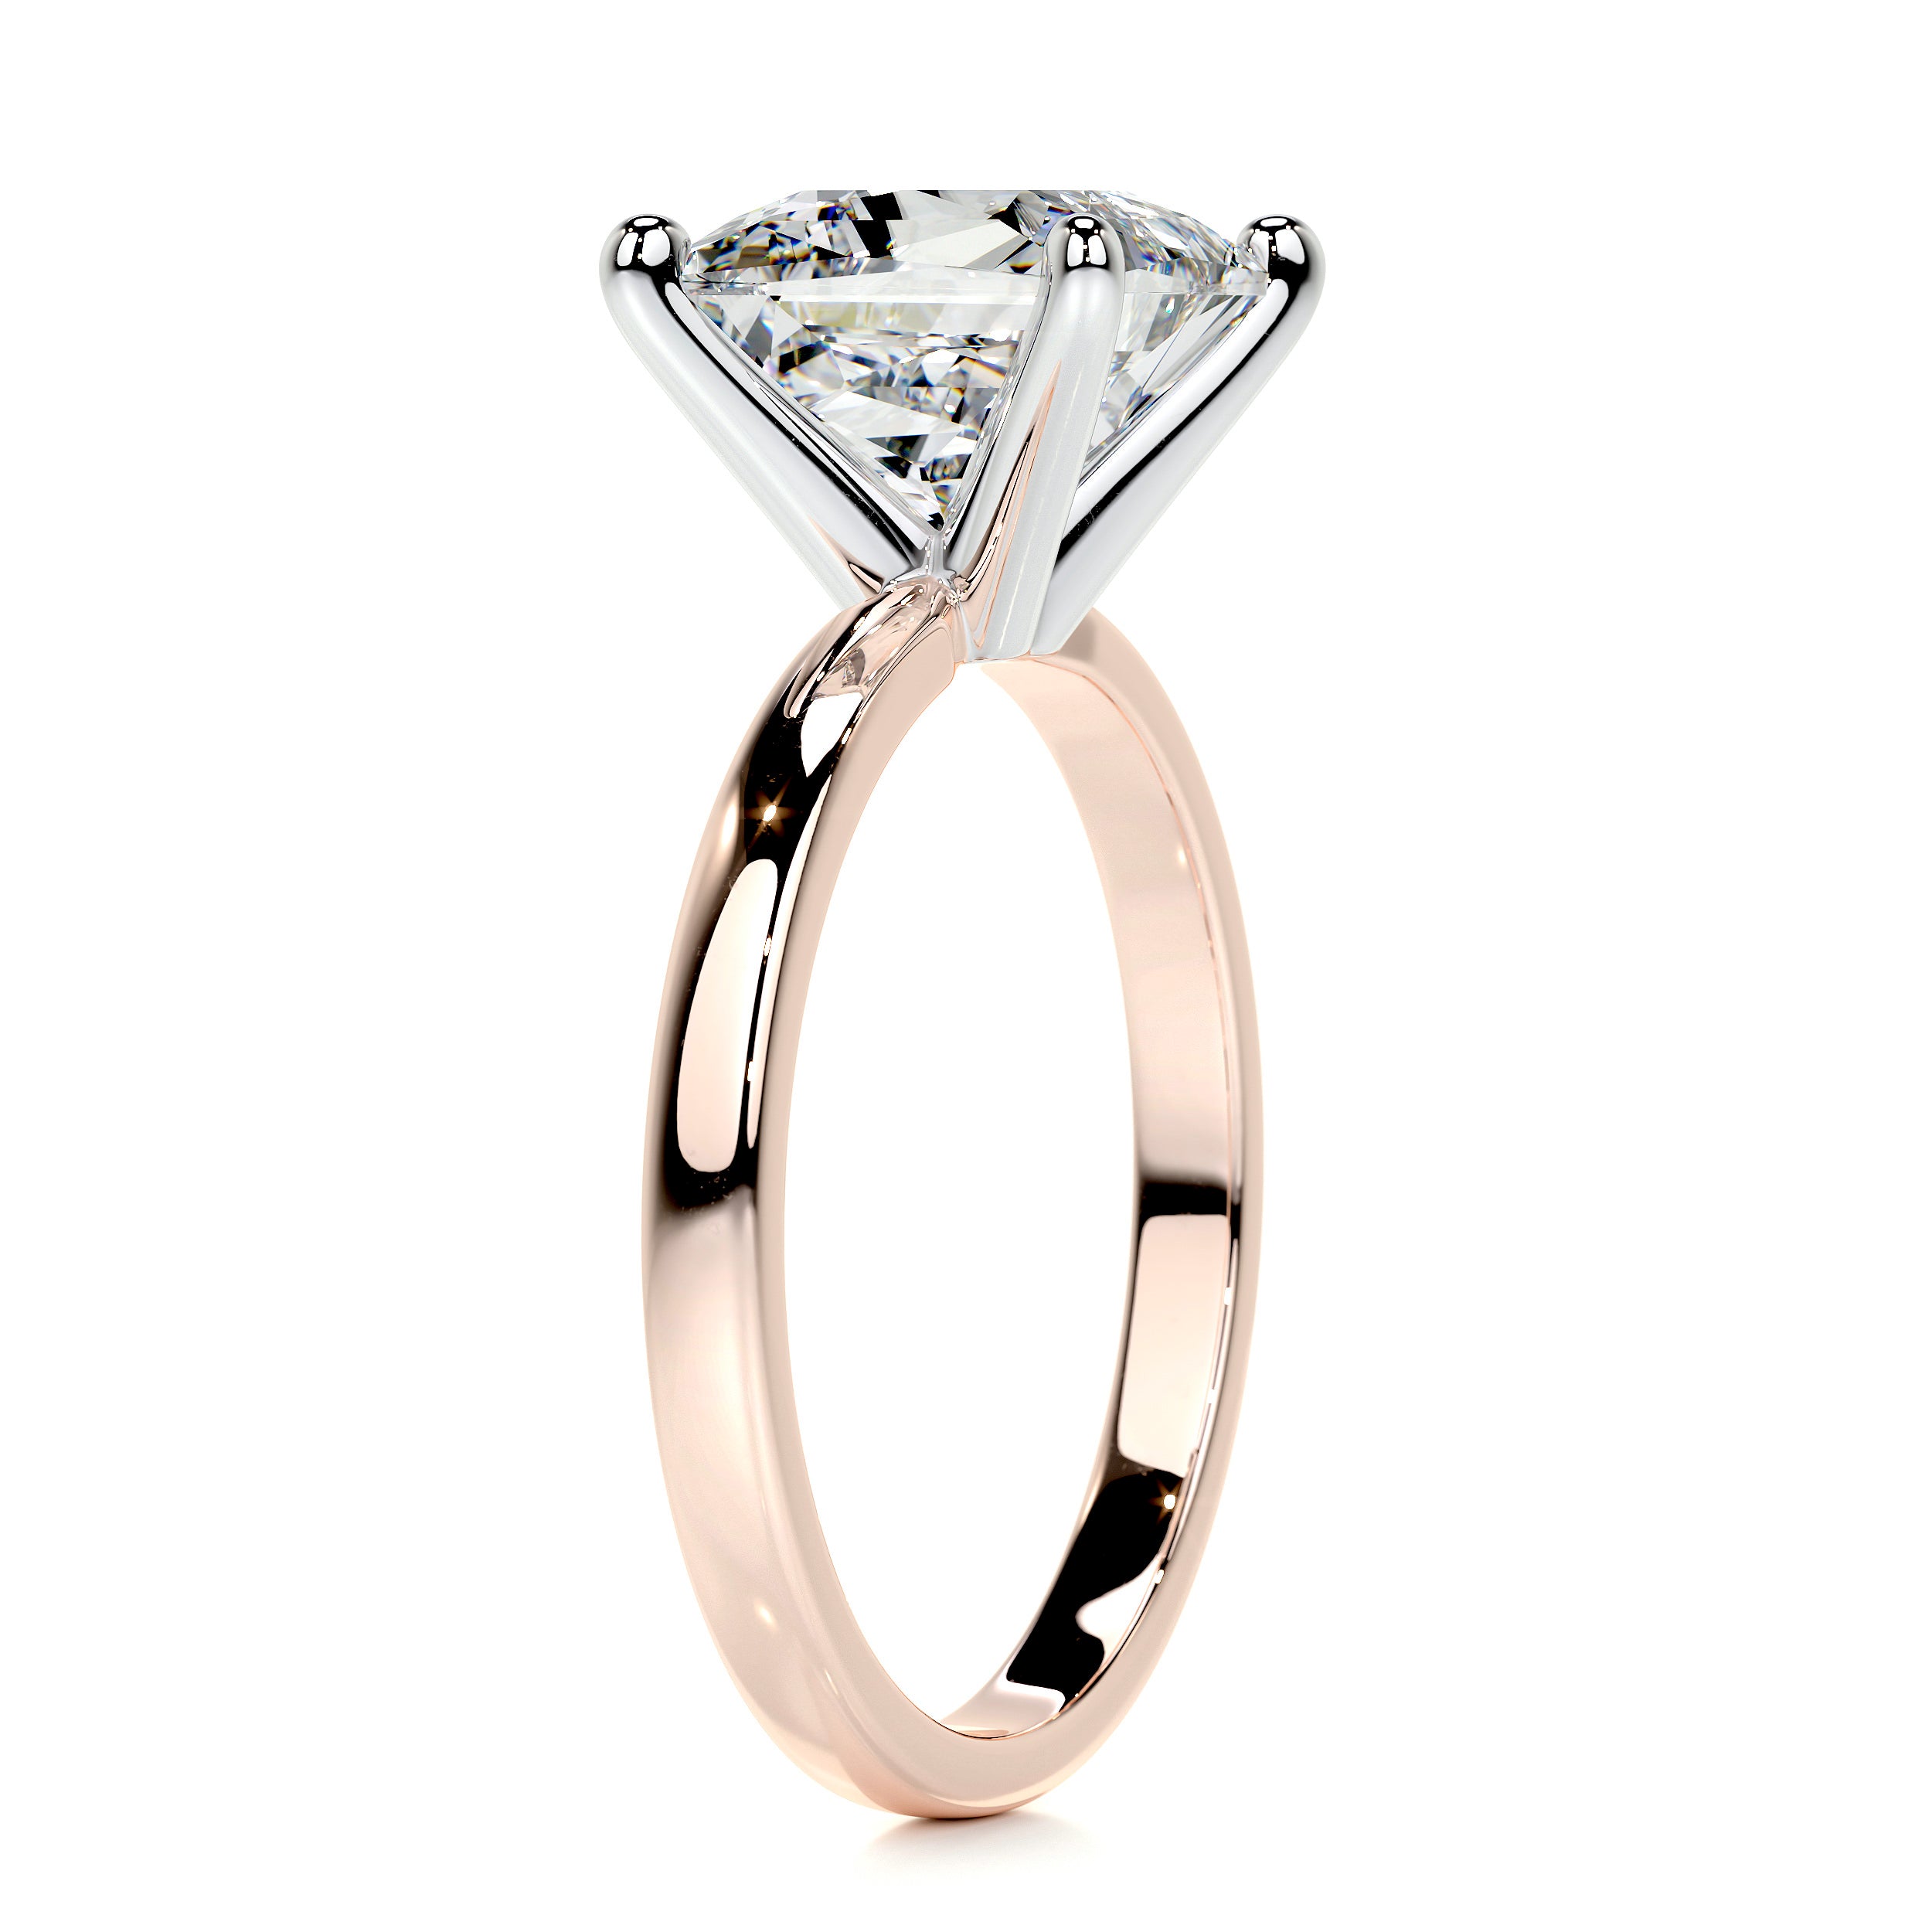 Jessica Diamond Engagement Ring   (3 Carat) -14K Rose Gold